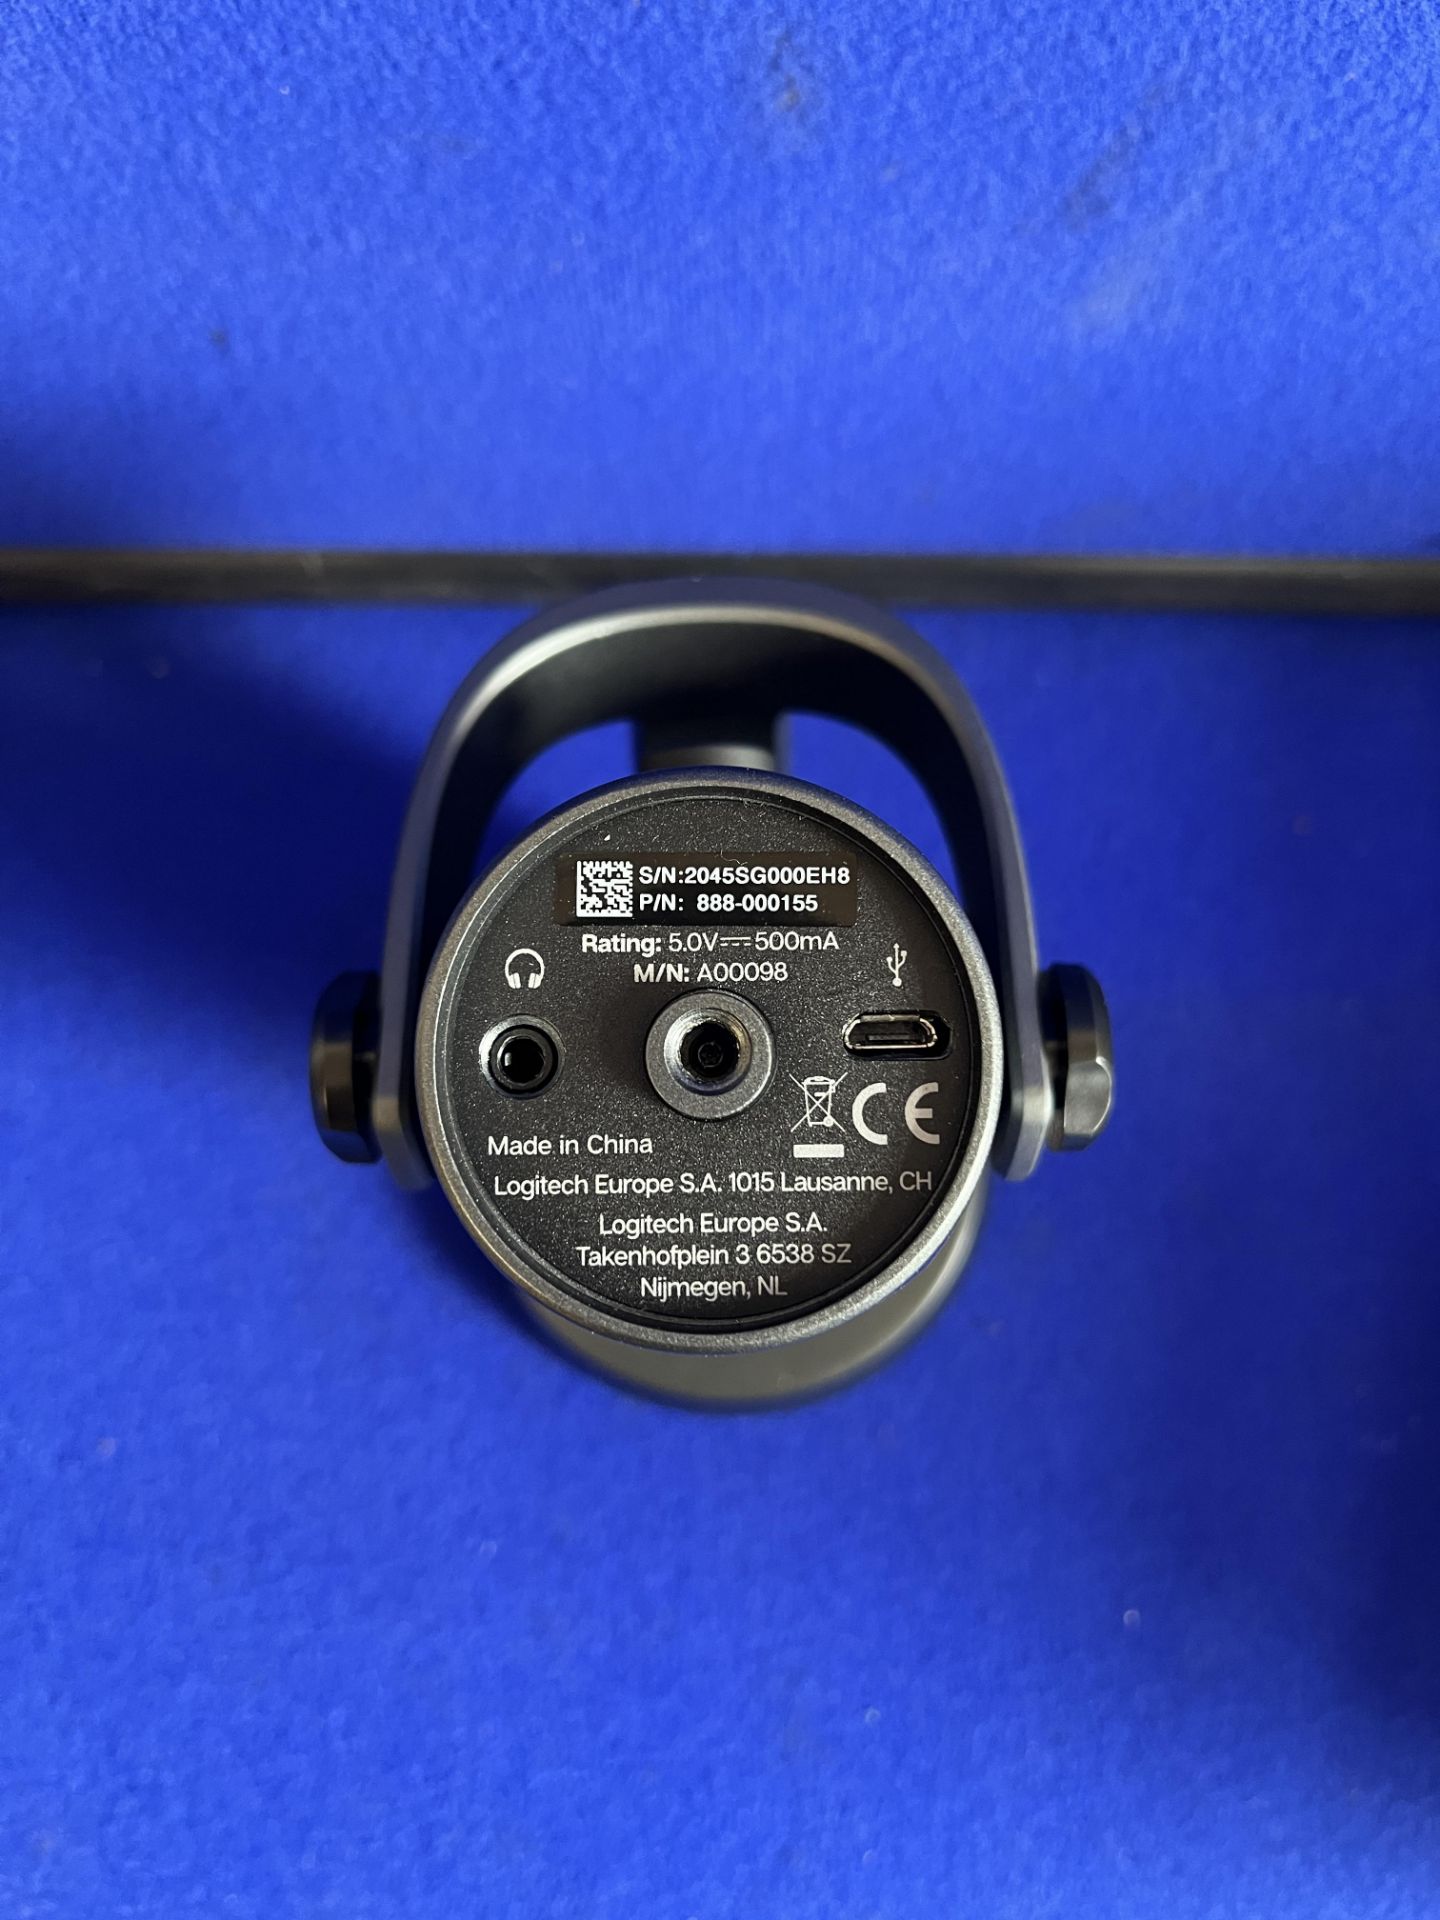 Blue Yeti Nano USB Microphone - Image 4 of 4